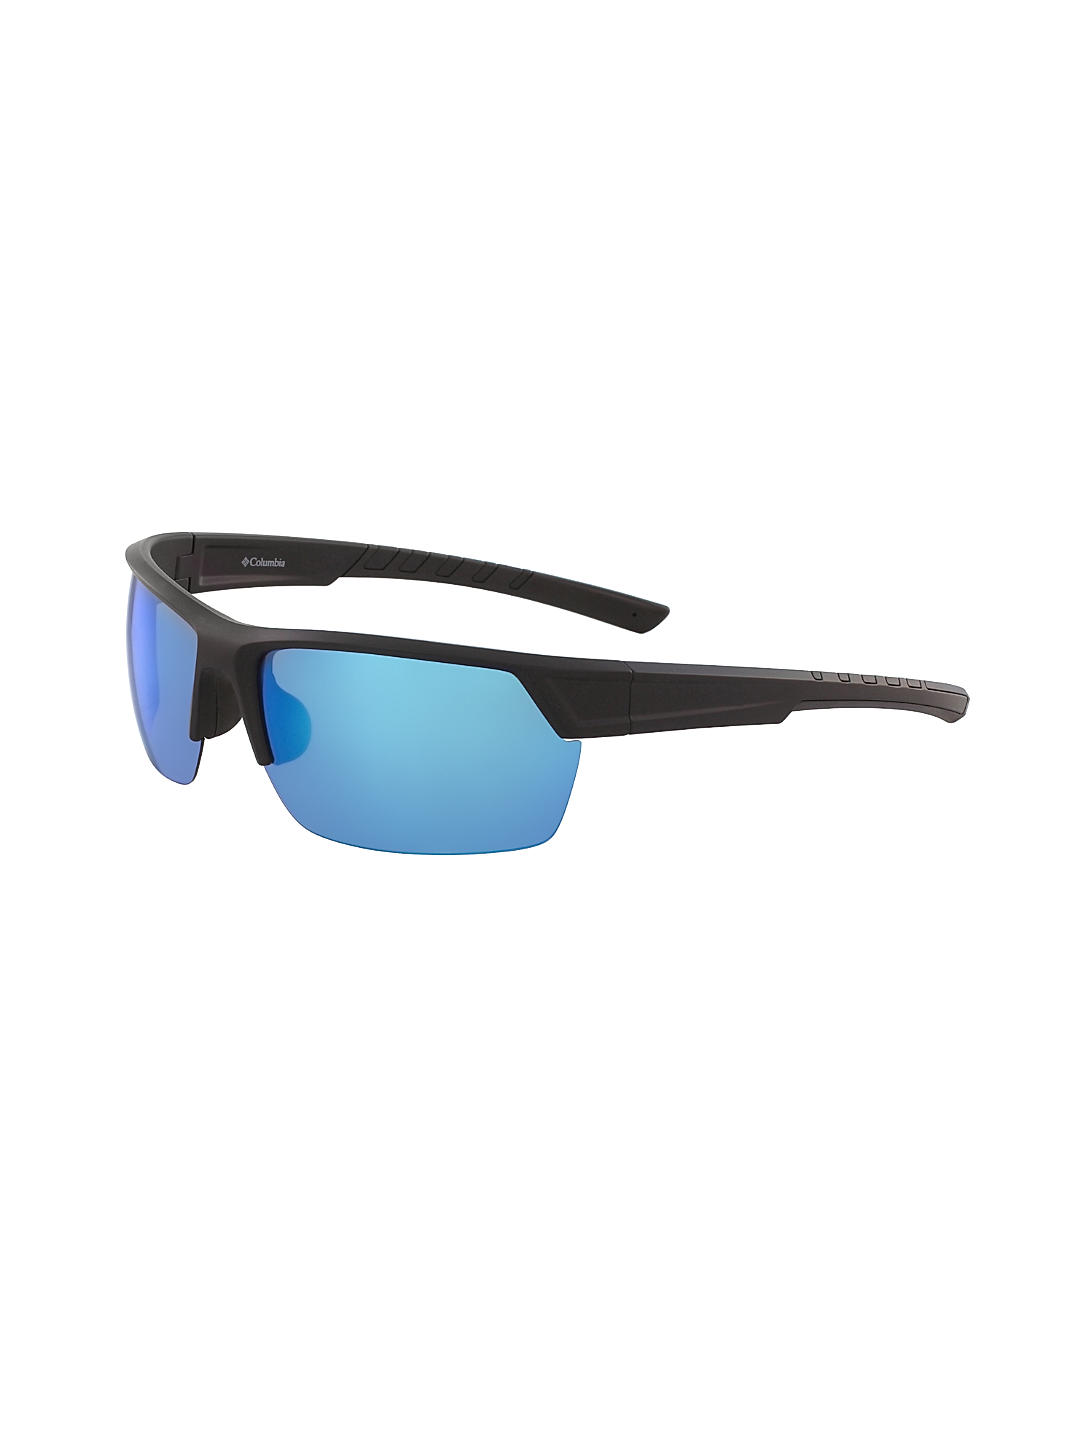 Buy Black Peak Racer Sunglasses for Men Online at Columbia Sportswear